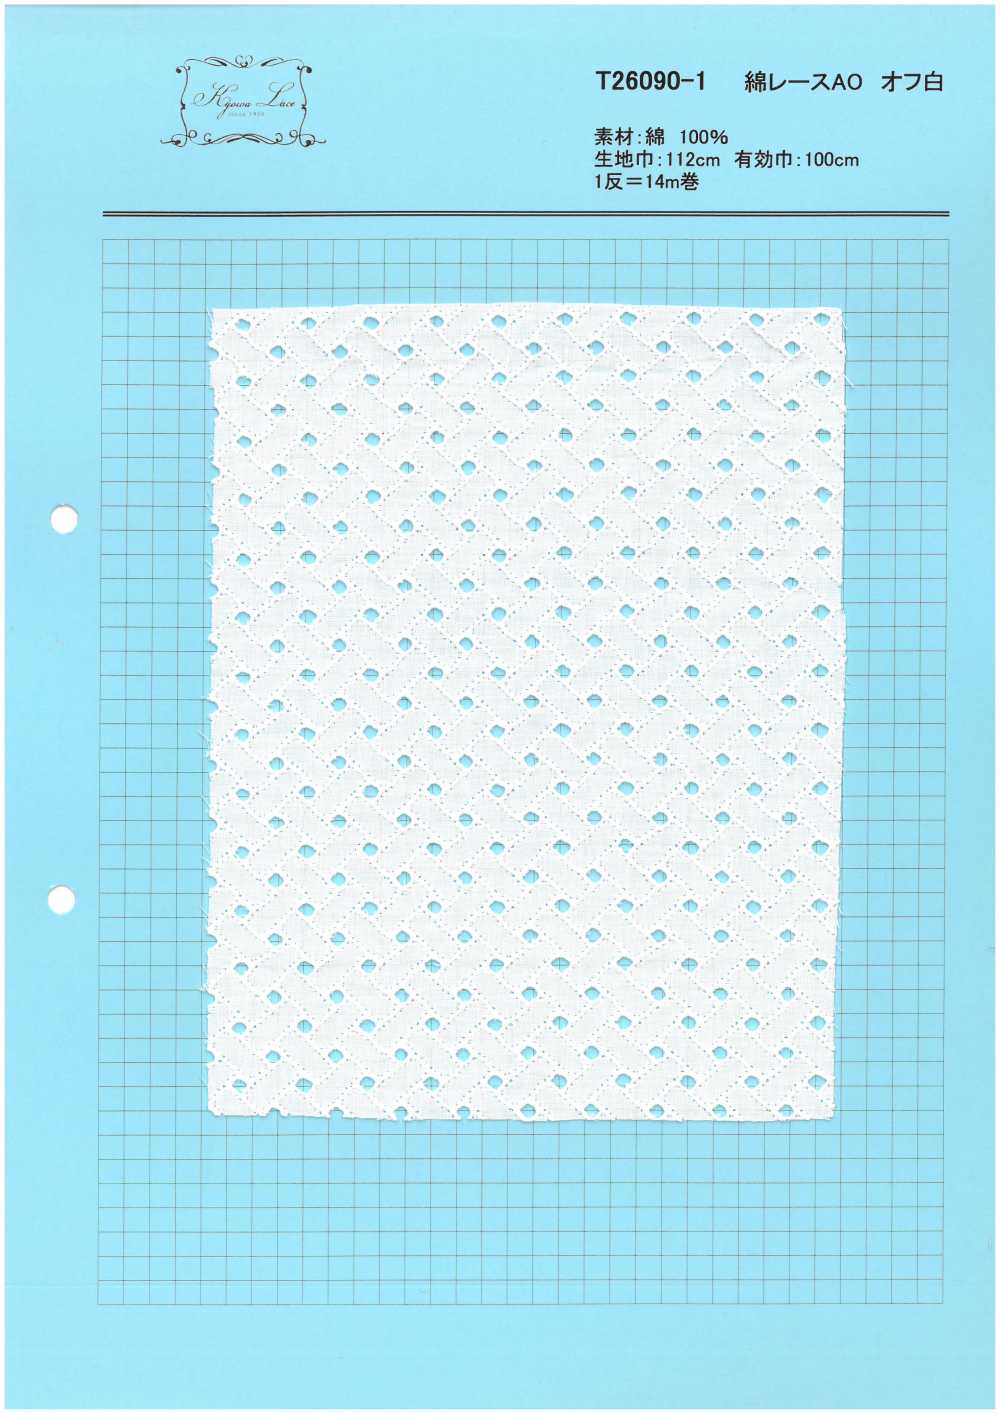 T26090-1 Cotton Lace AO Off White[Textile / Fabric] Kyowa Lace